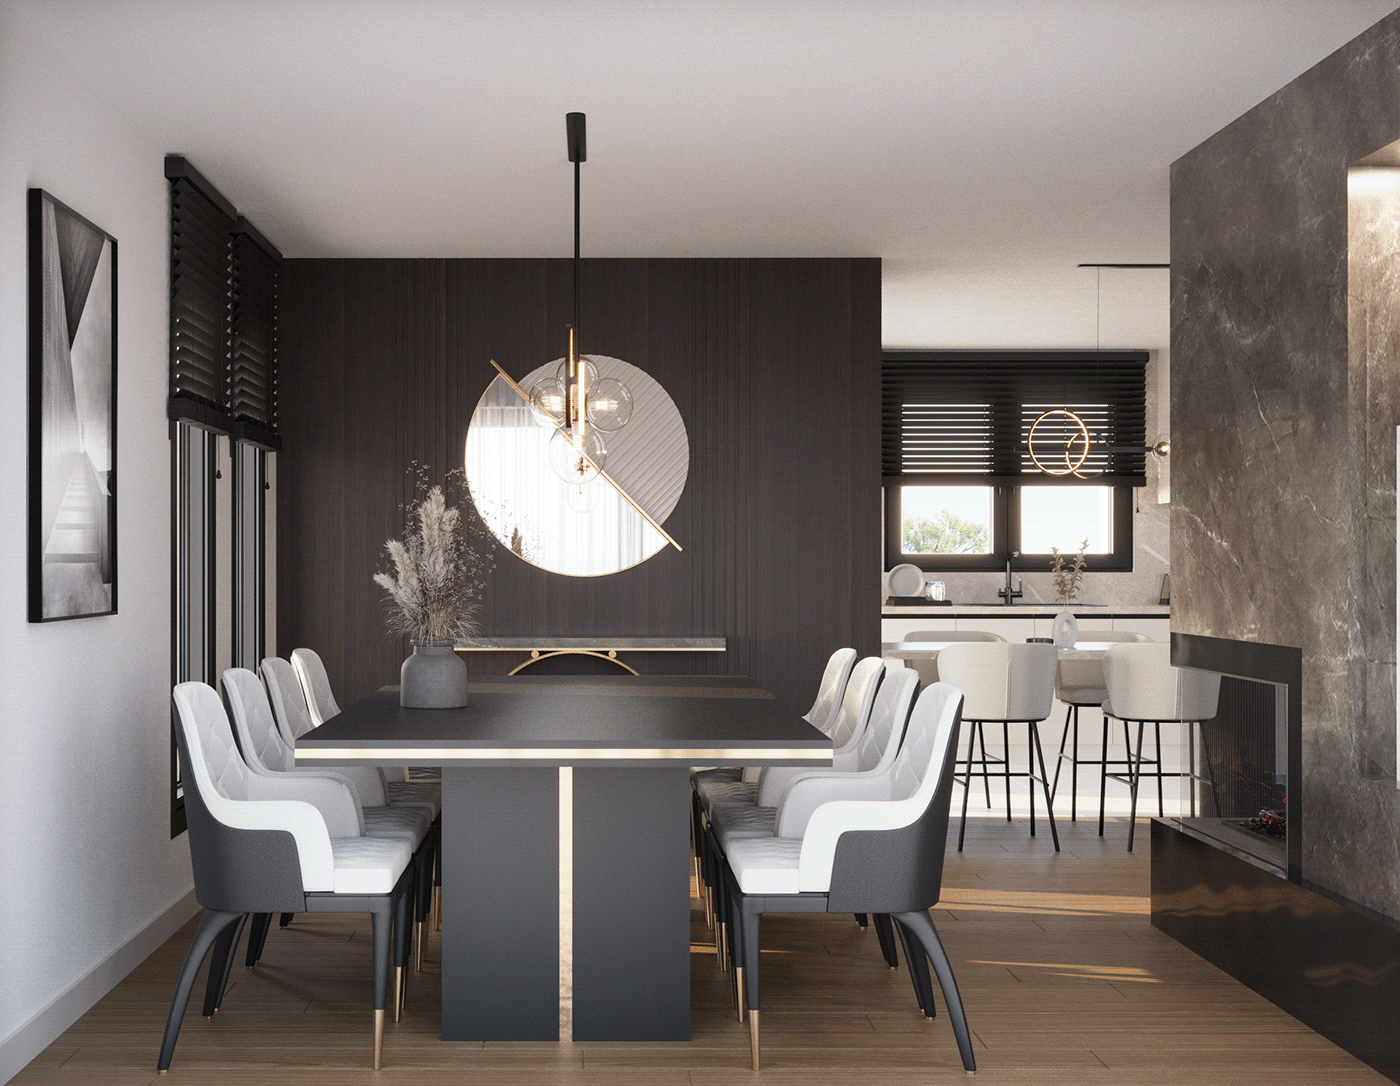 corona Render architecture visualization interior design  3ds max modern 3D